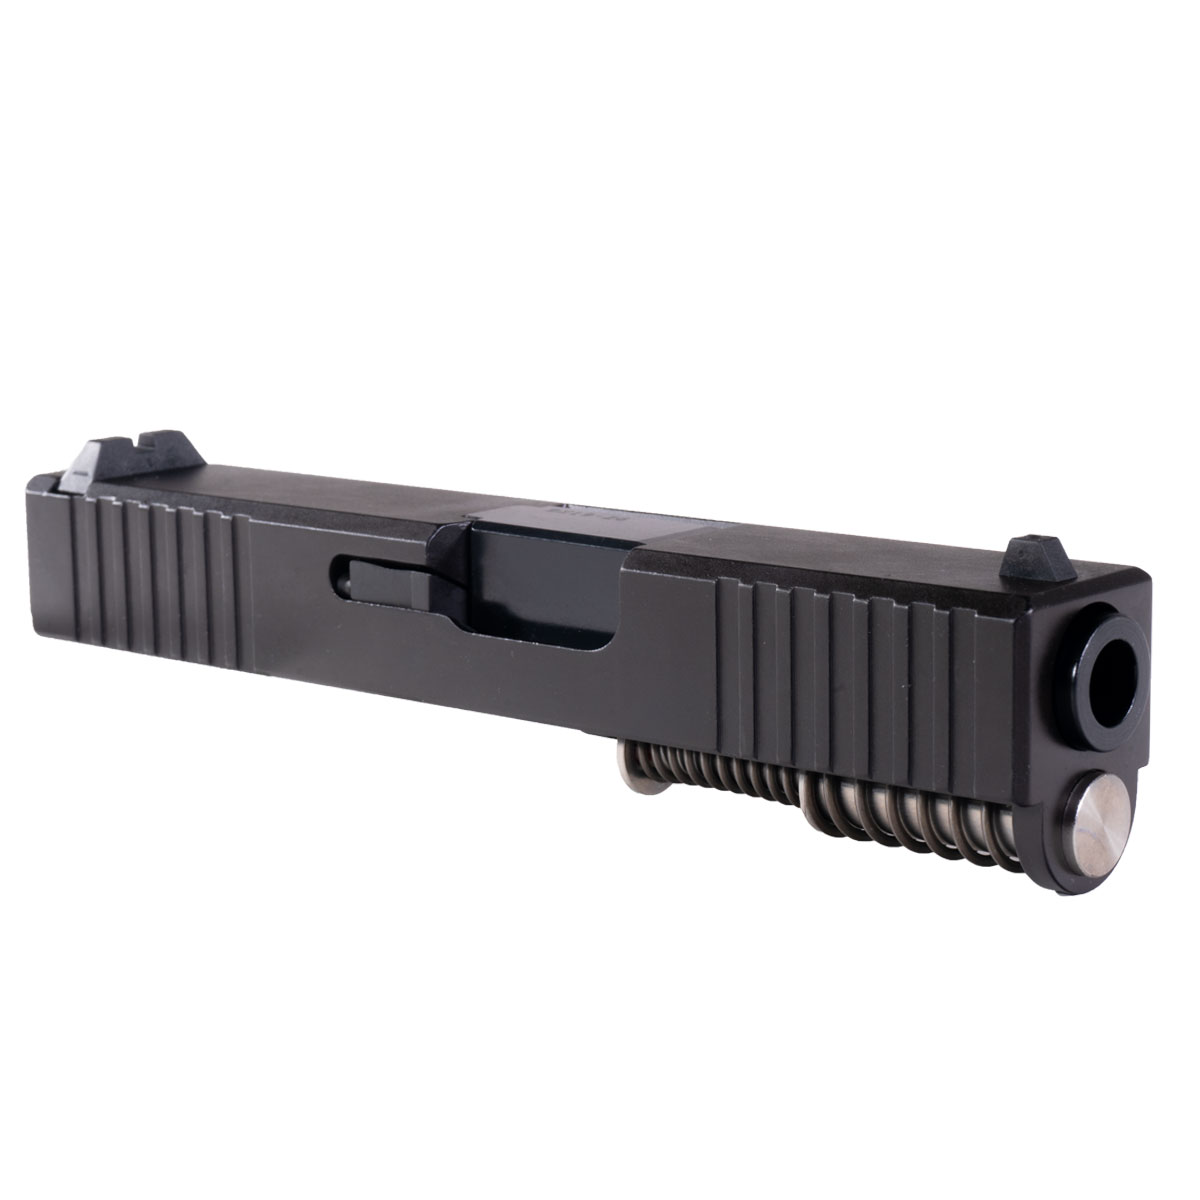 MMC 'Burly' 9mm Complete Slide Kit - Glock 26 Gen 1-2 Compatible